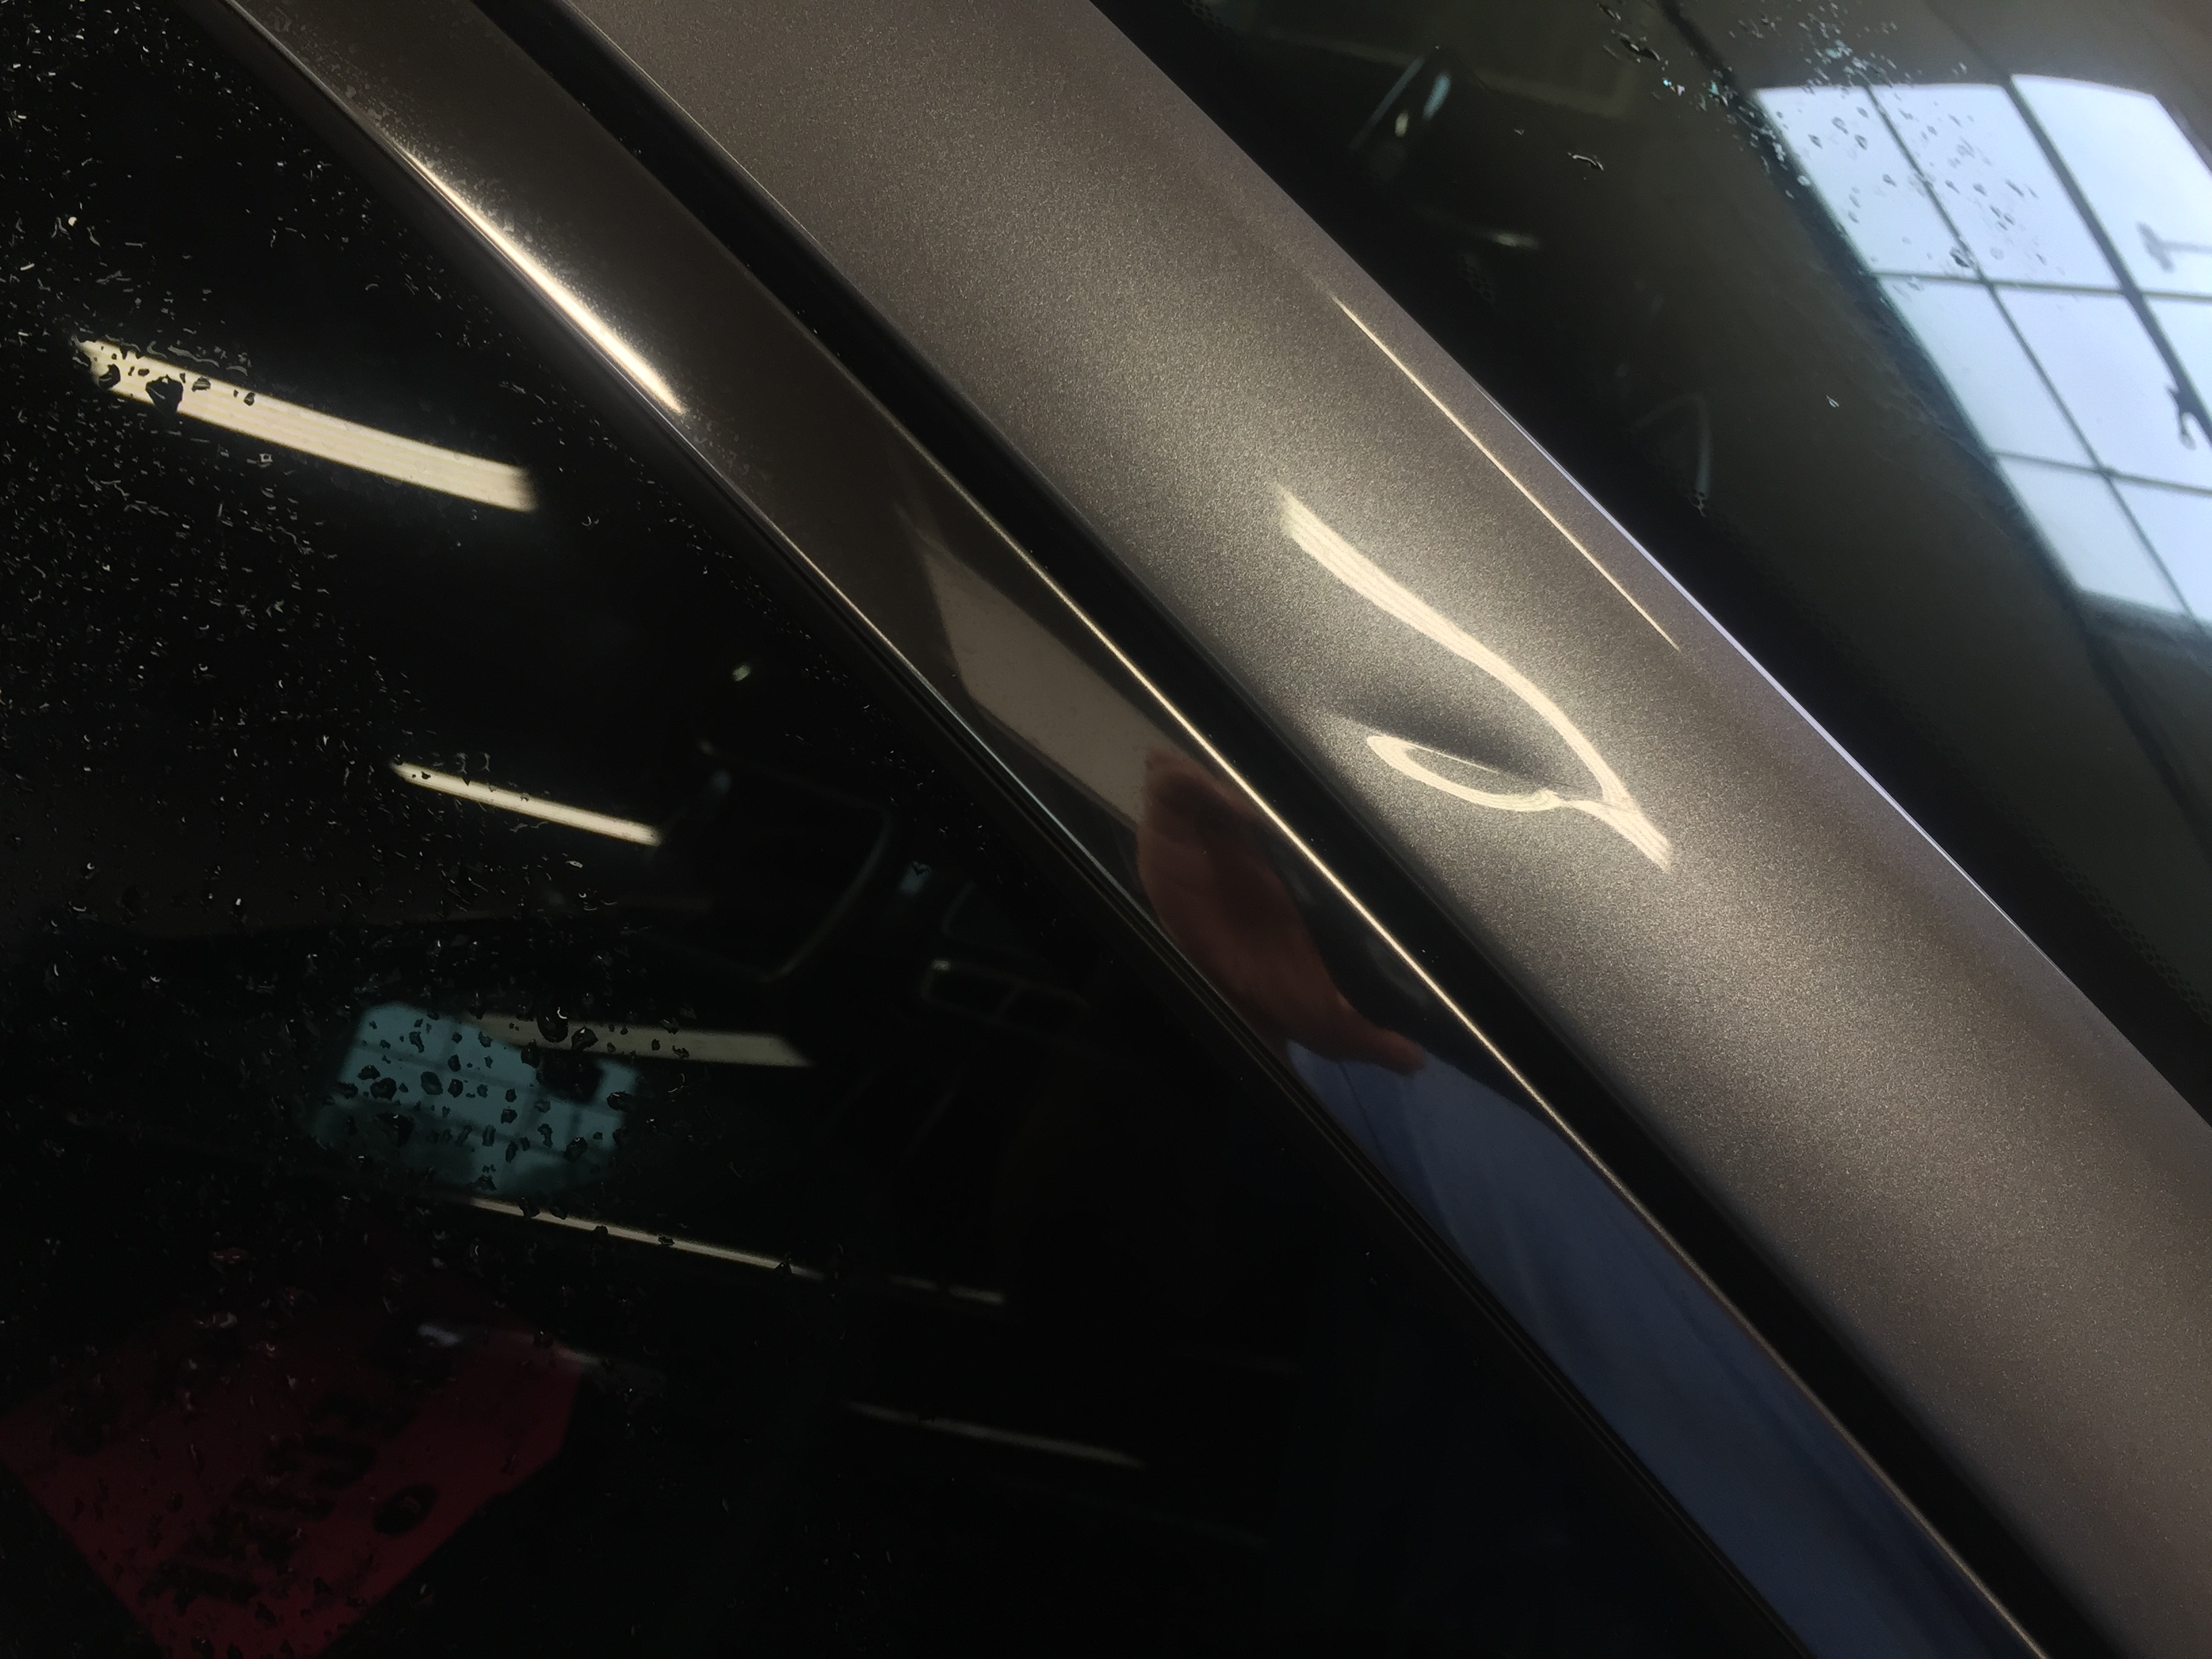 2015 Chrysler 300 Sharp Dent Removal on Pillar all glue pull, paintless dent repair, Springfield, IL http://217dent.com